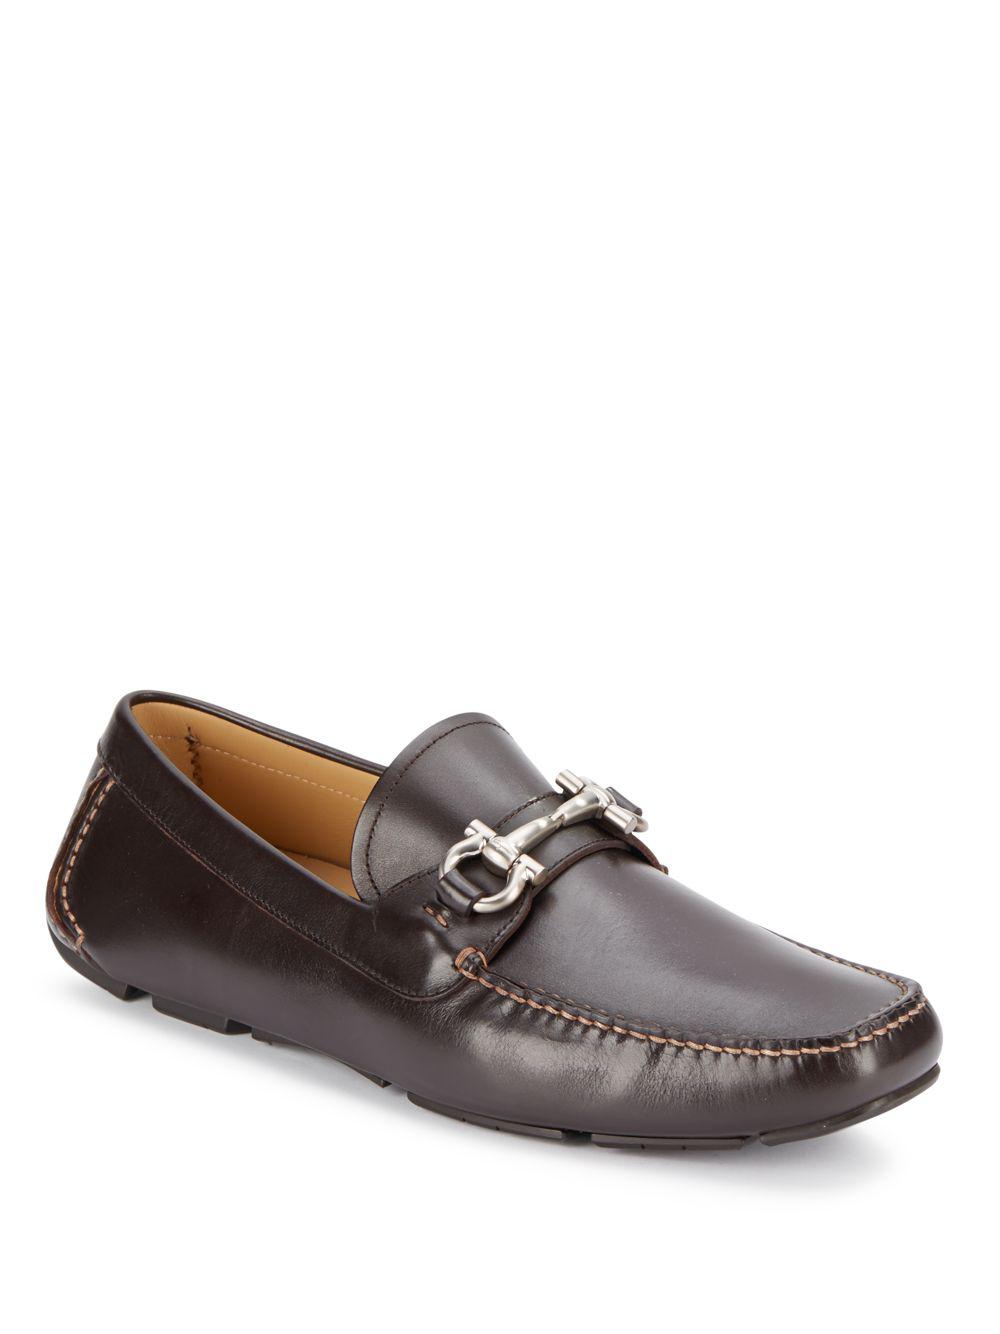 Ferragamo Leather Silvertone Horse-bit Loafers in Brown for Men - Lyst